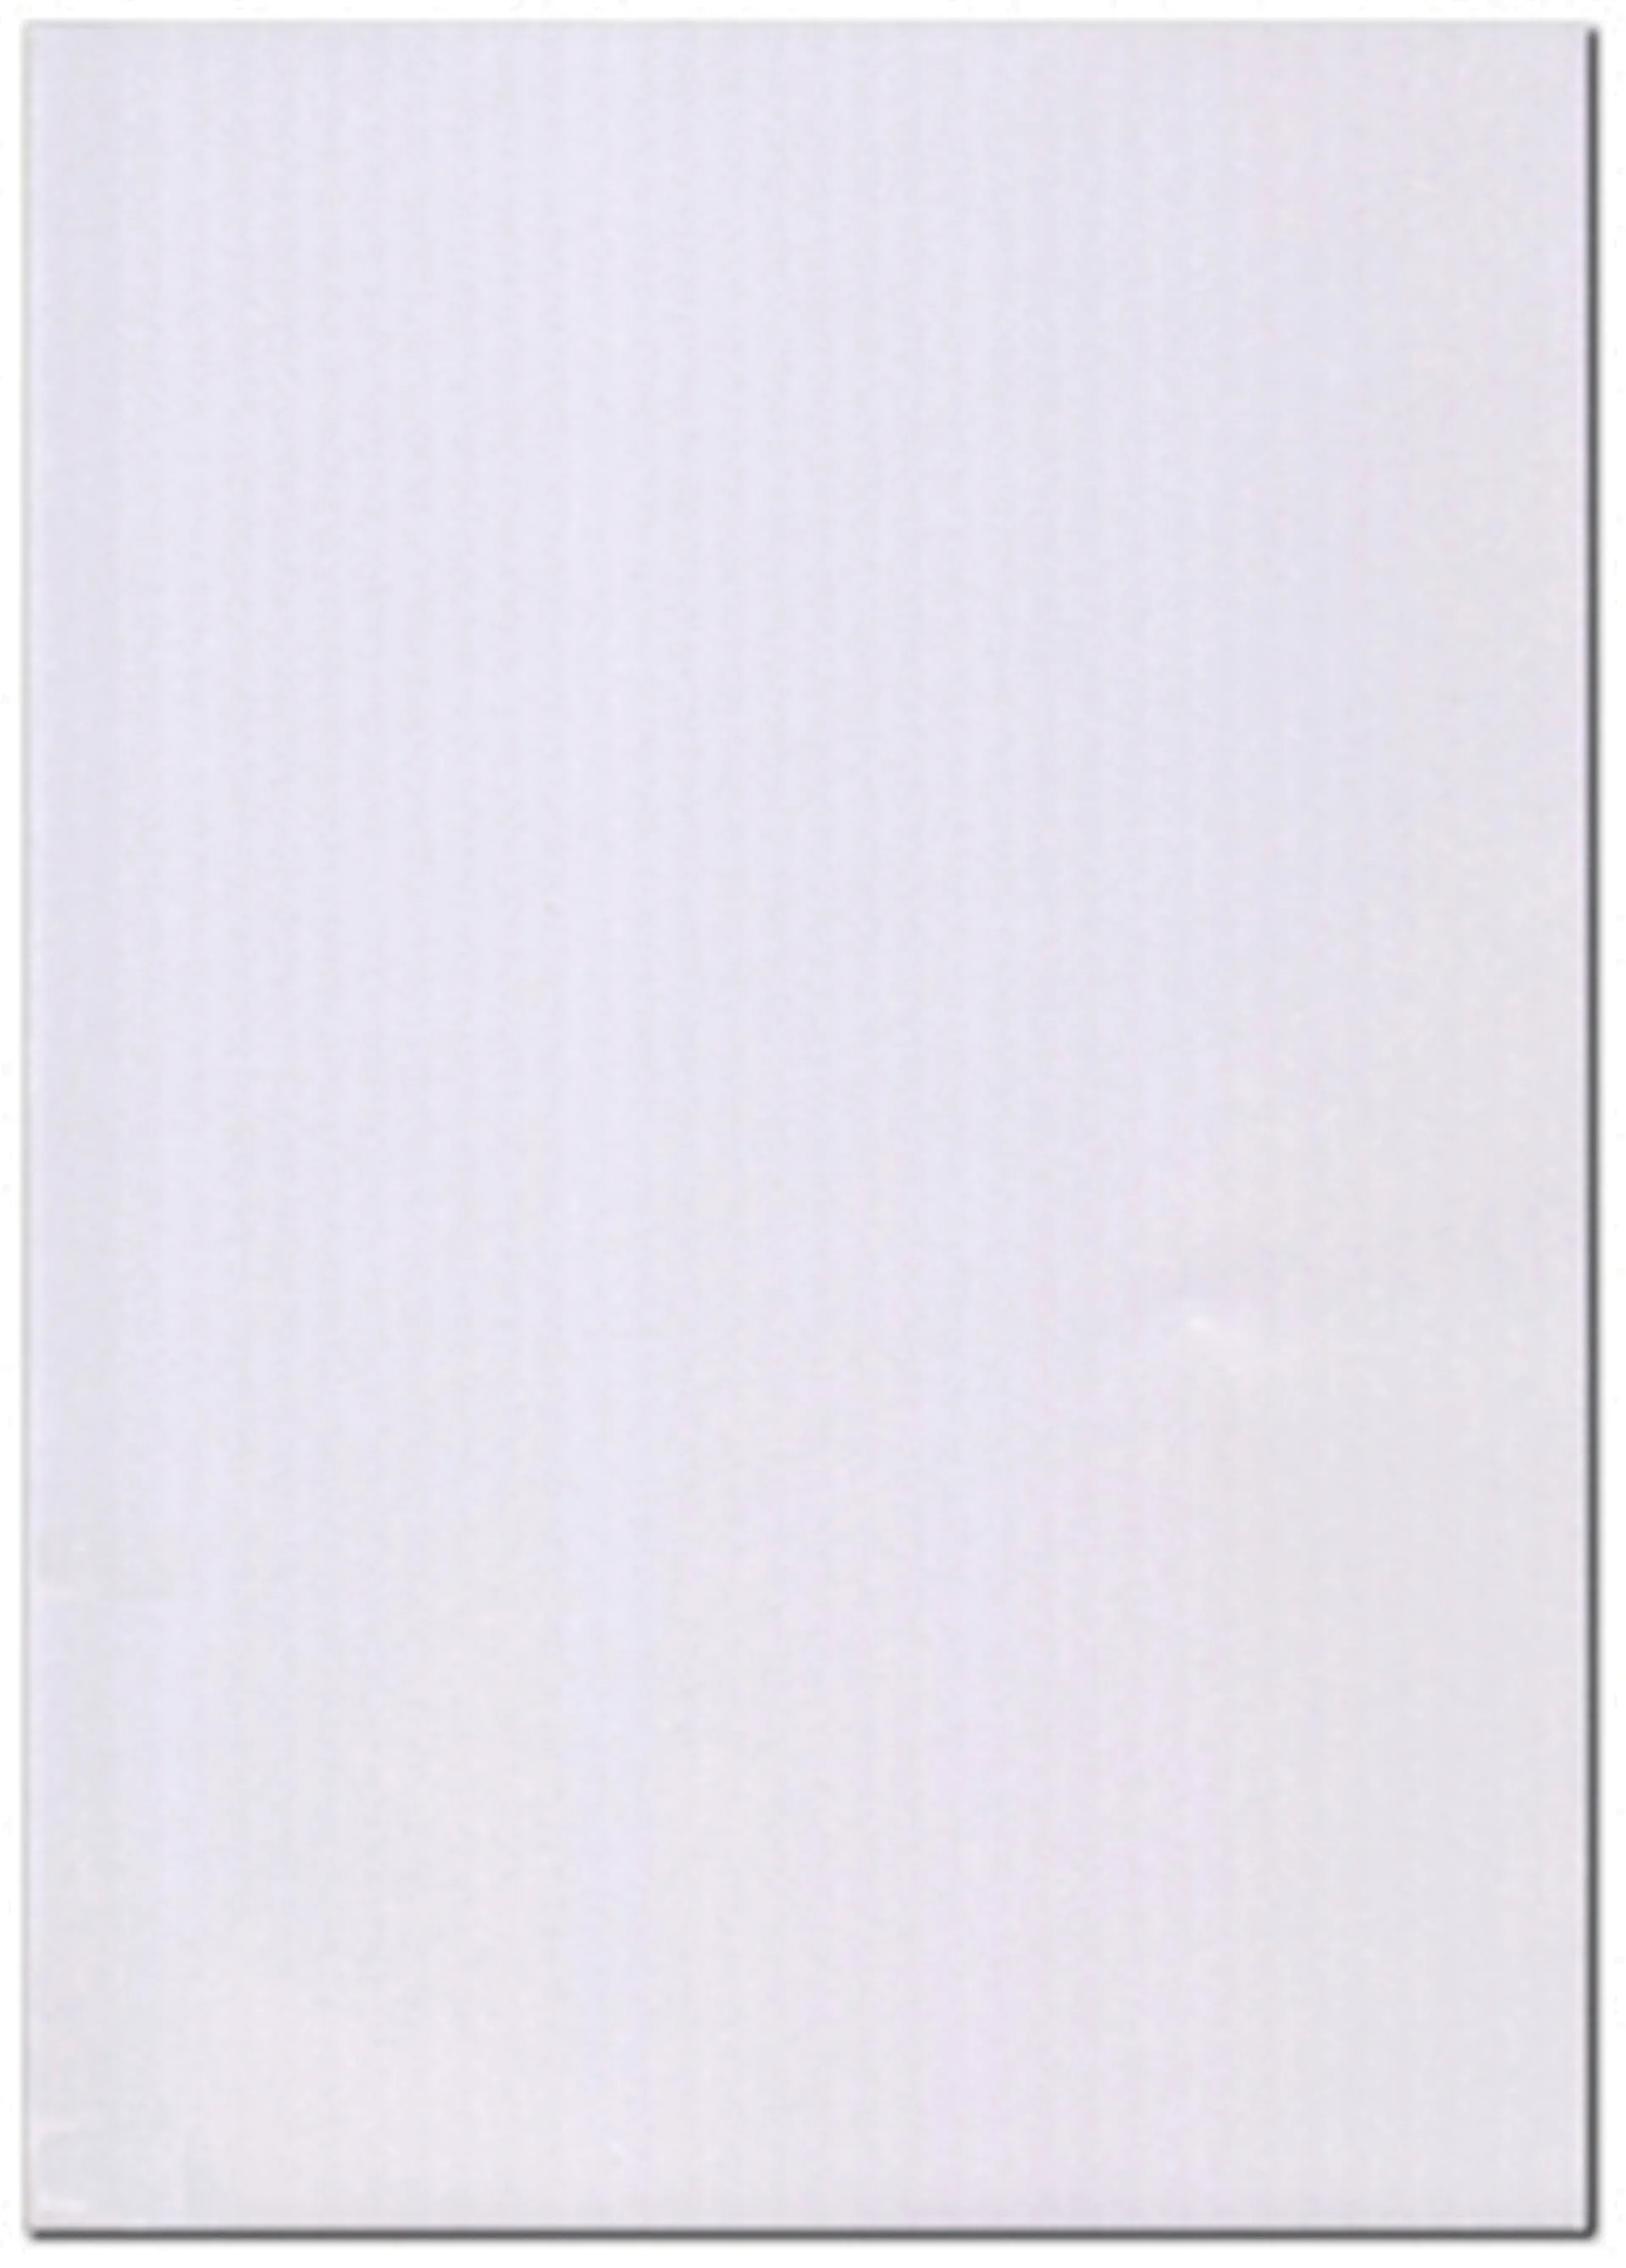 Karto kartonki valkoinen 50x70cm 220gsm 5ark/pss